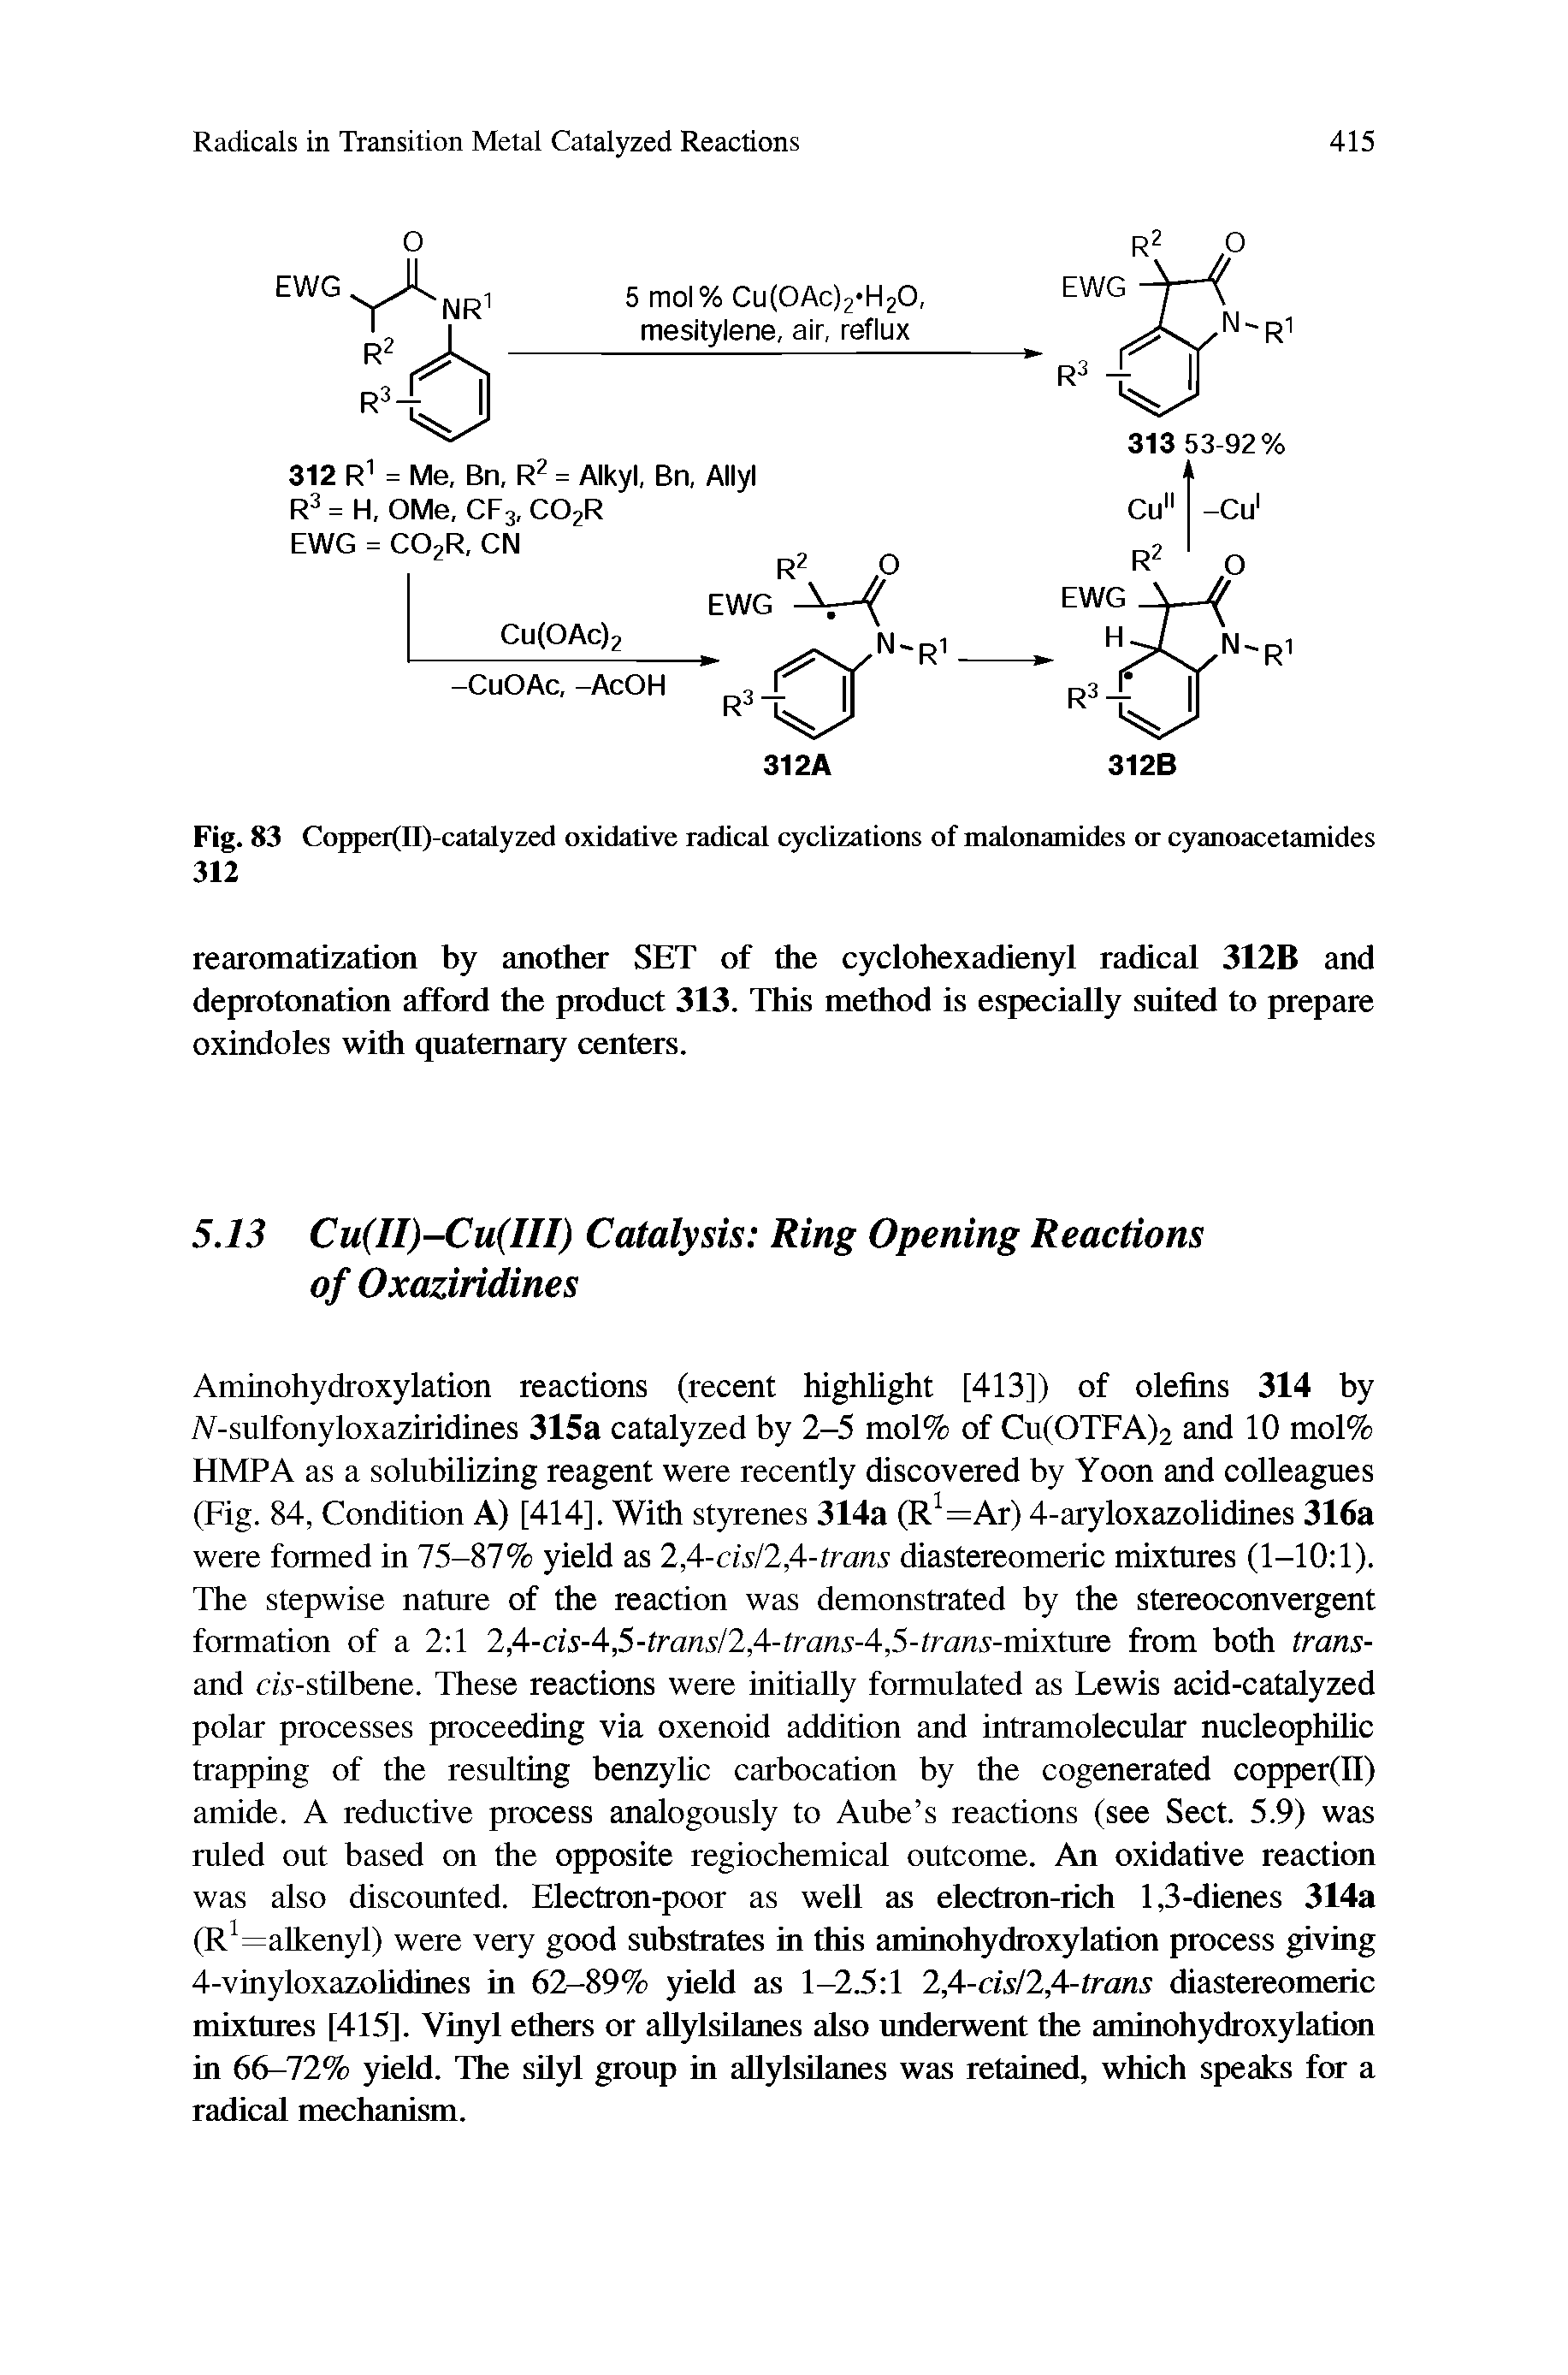 Fig. 83 Copper(II)-catalyzed oxidative radical cyclizations of malonamides or cyanoacetamides...